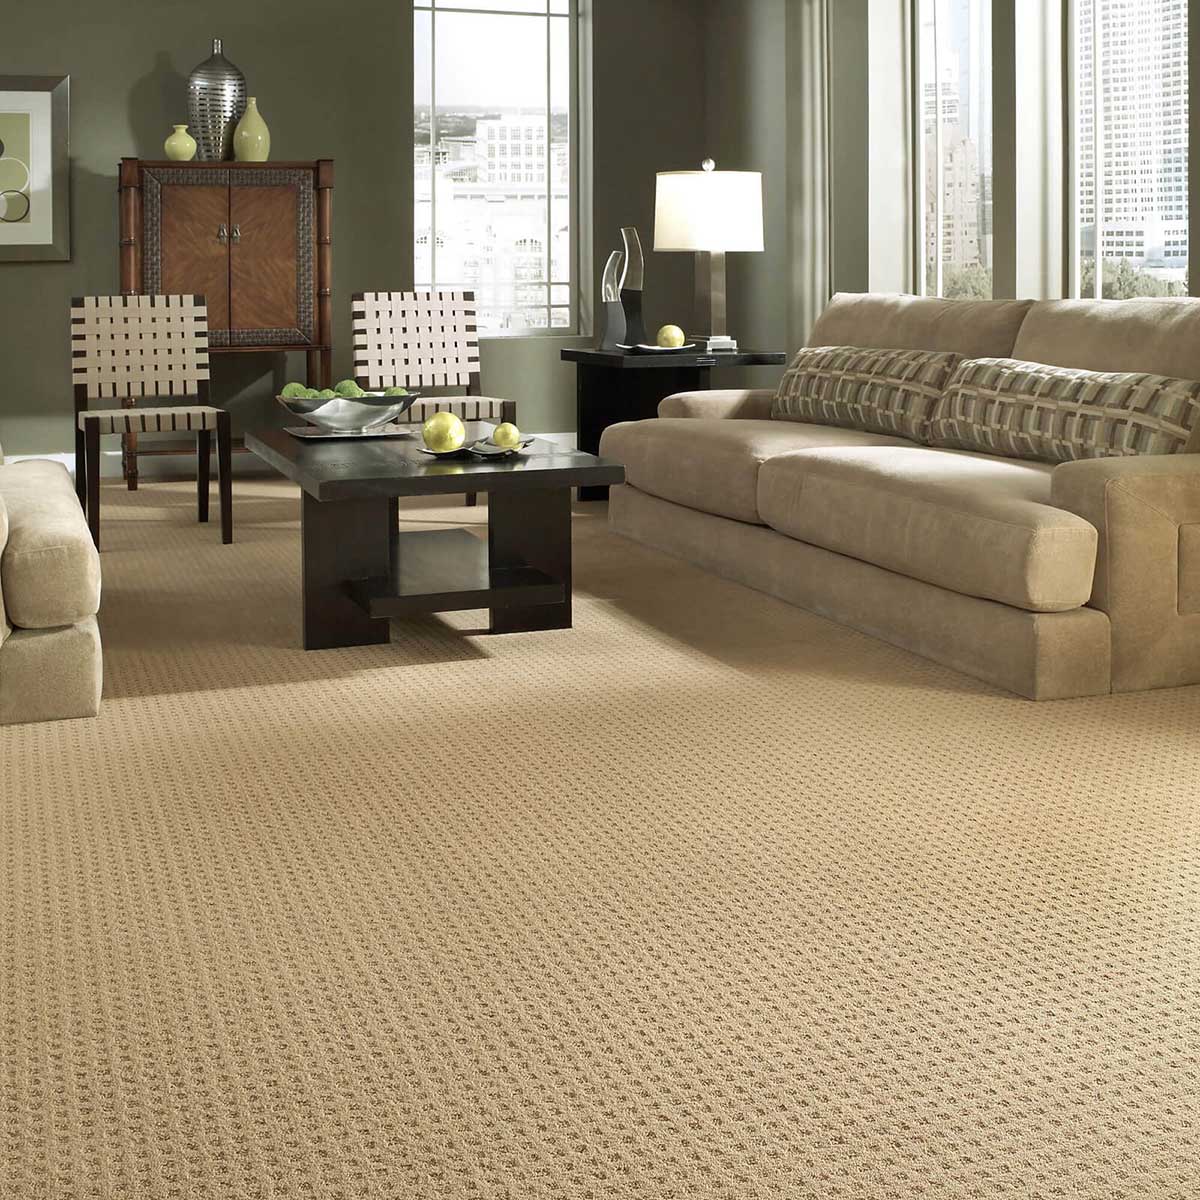 Carpet Inspiration | Carpetland USA Granite & Flooring